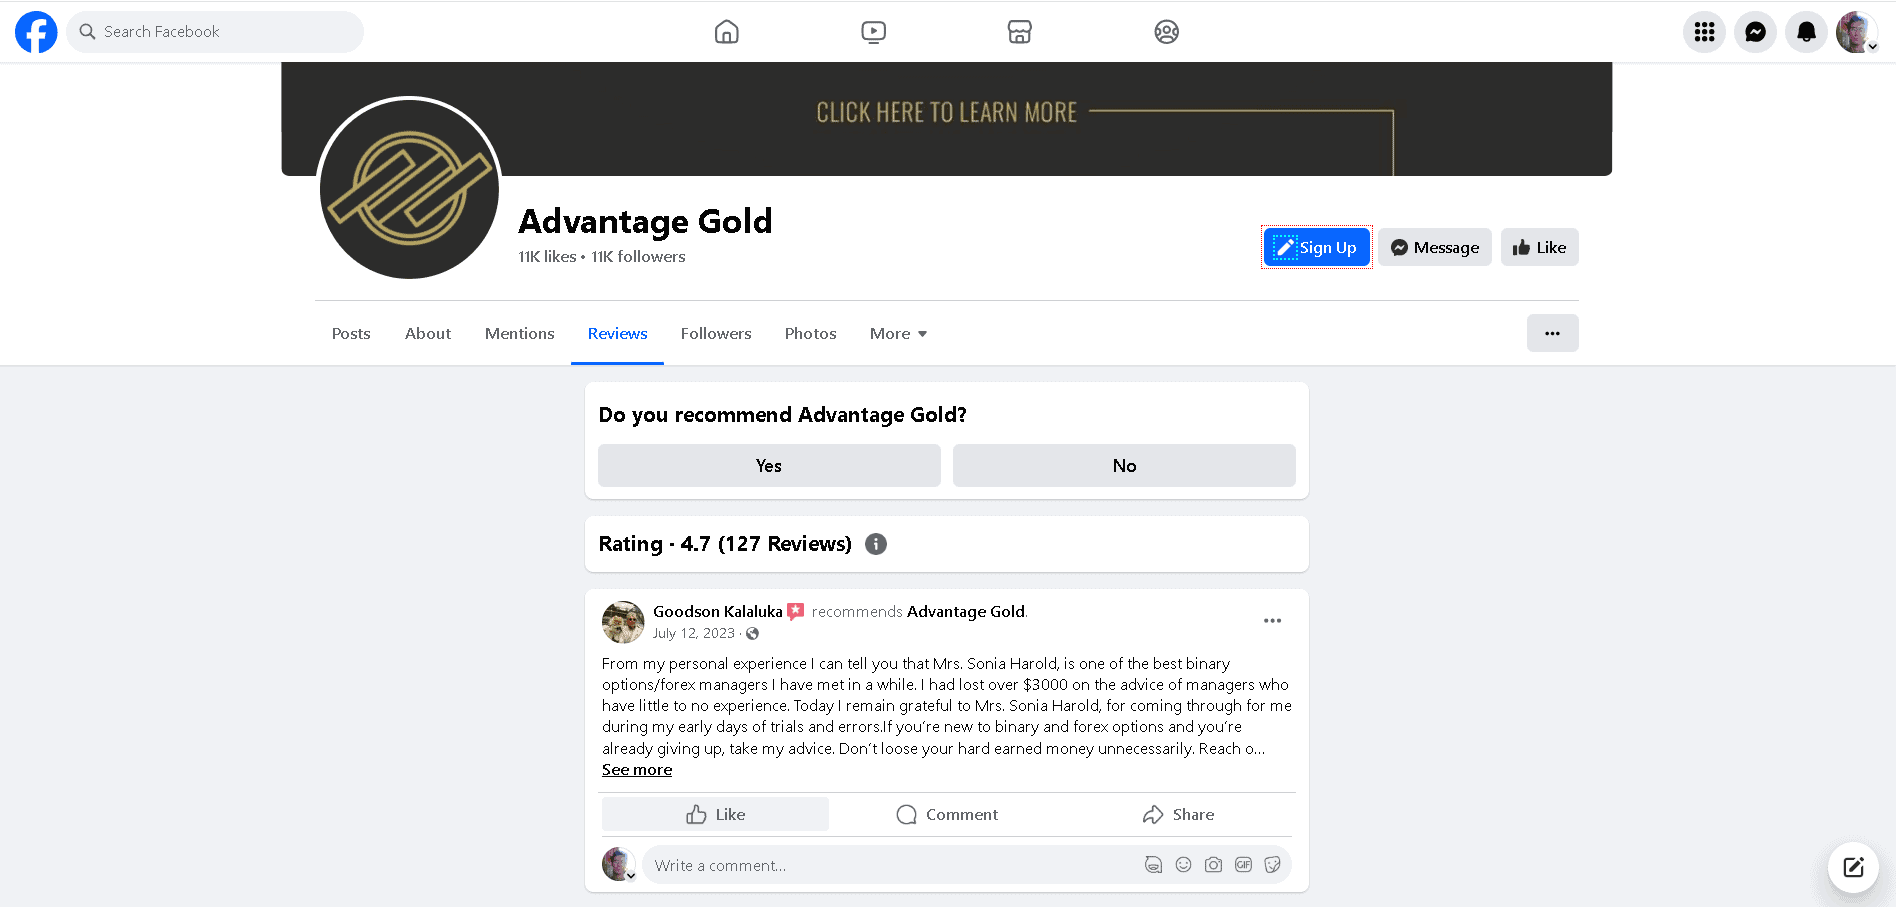 Advantage Gold Facebook profile and customer reviews